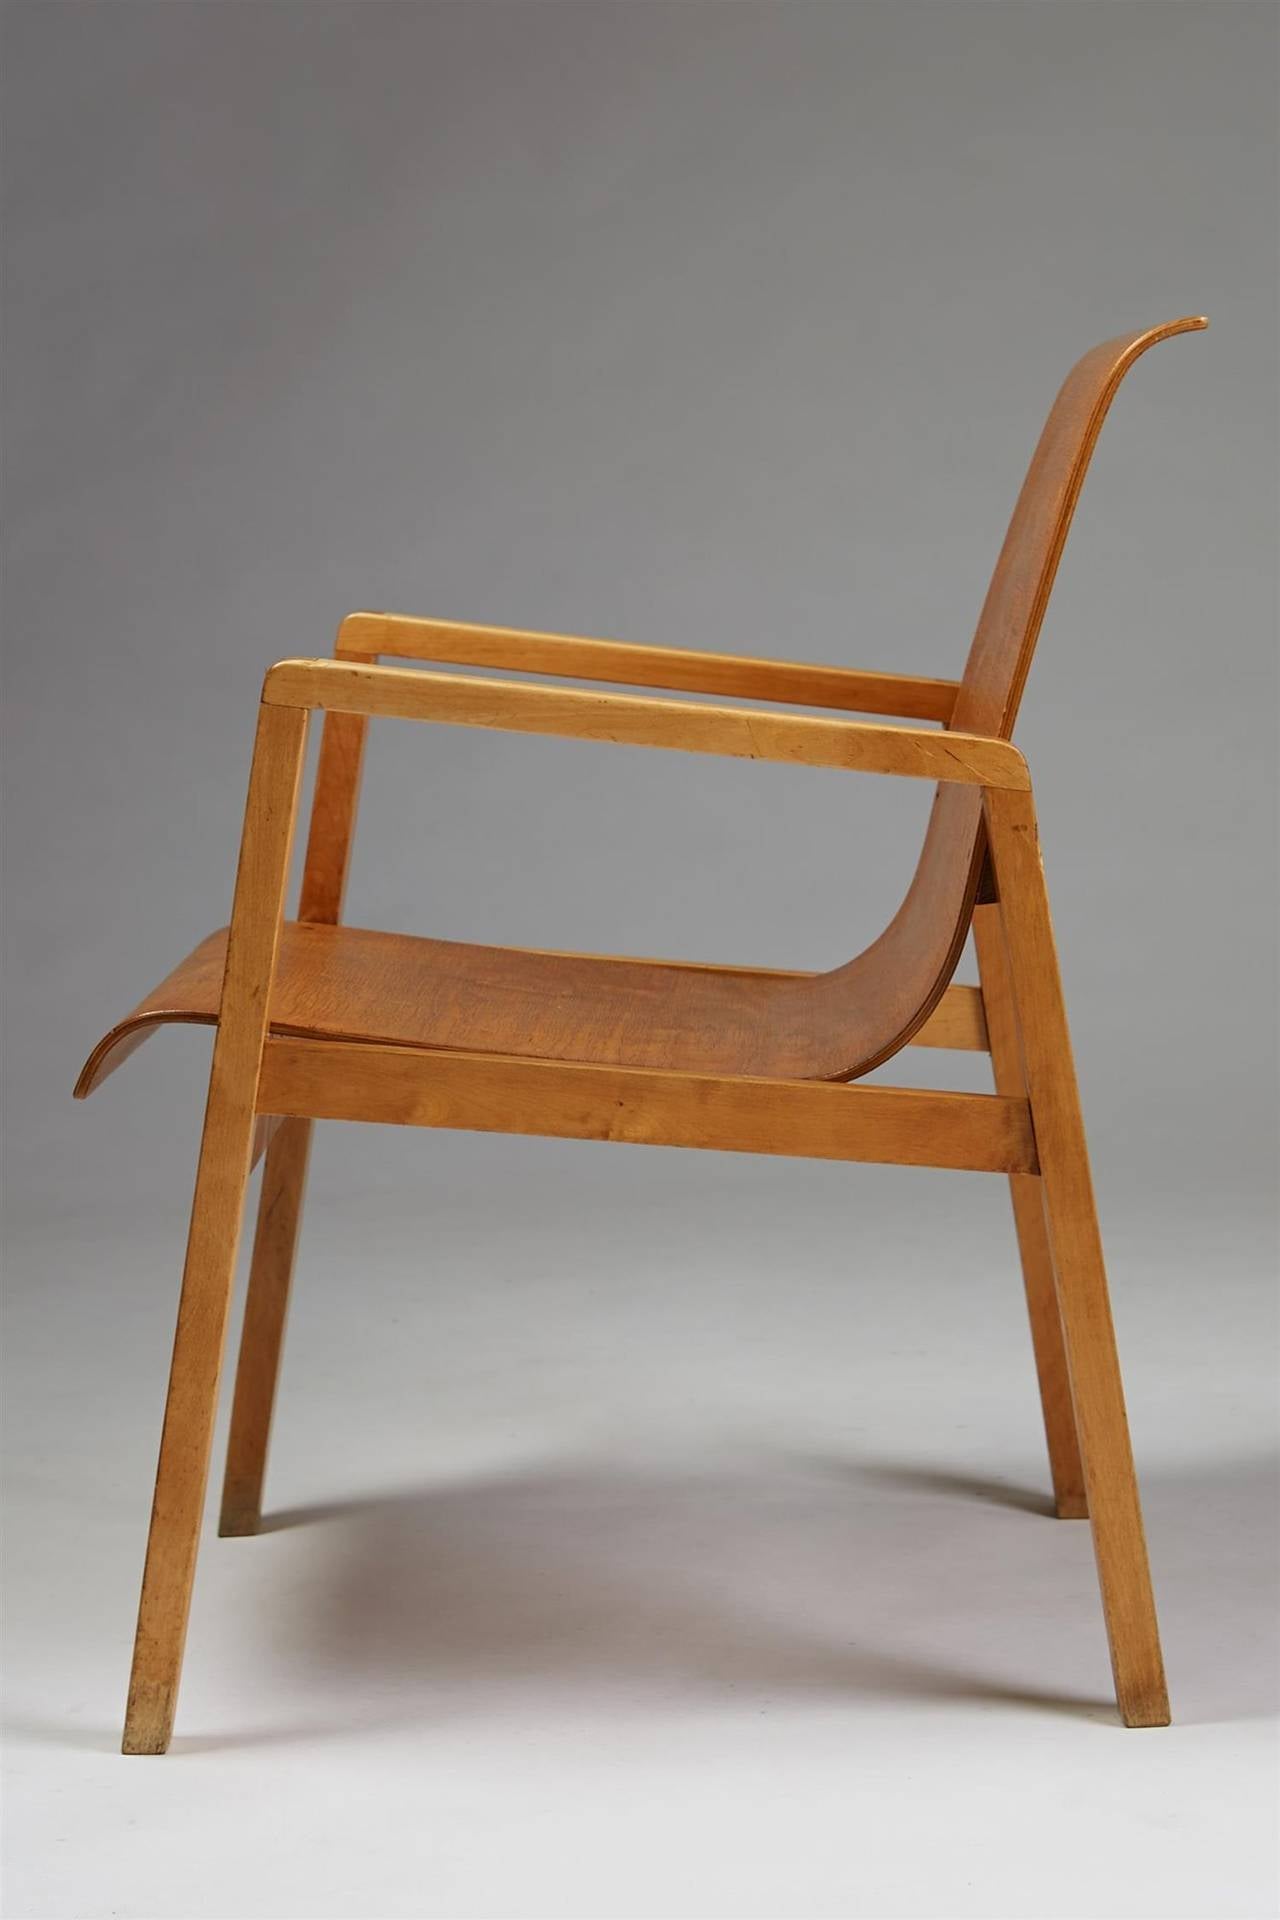 Mid-20th Century Chair Designed by Alvar Aalto for Artek, Finland, 1950s